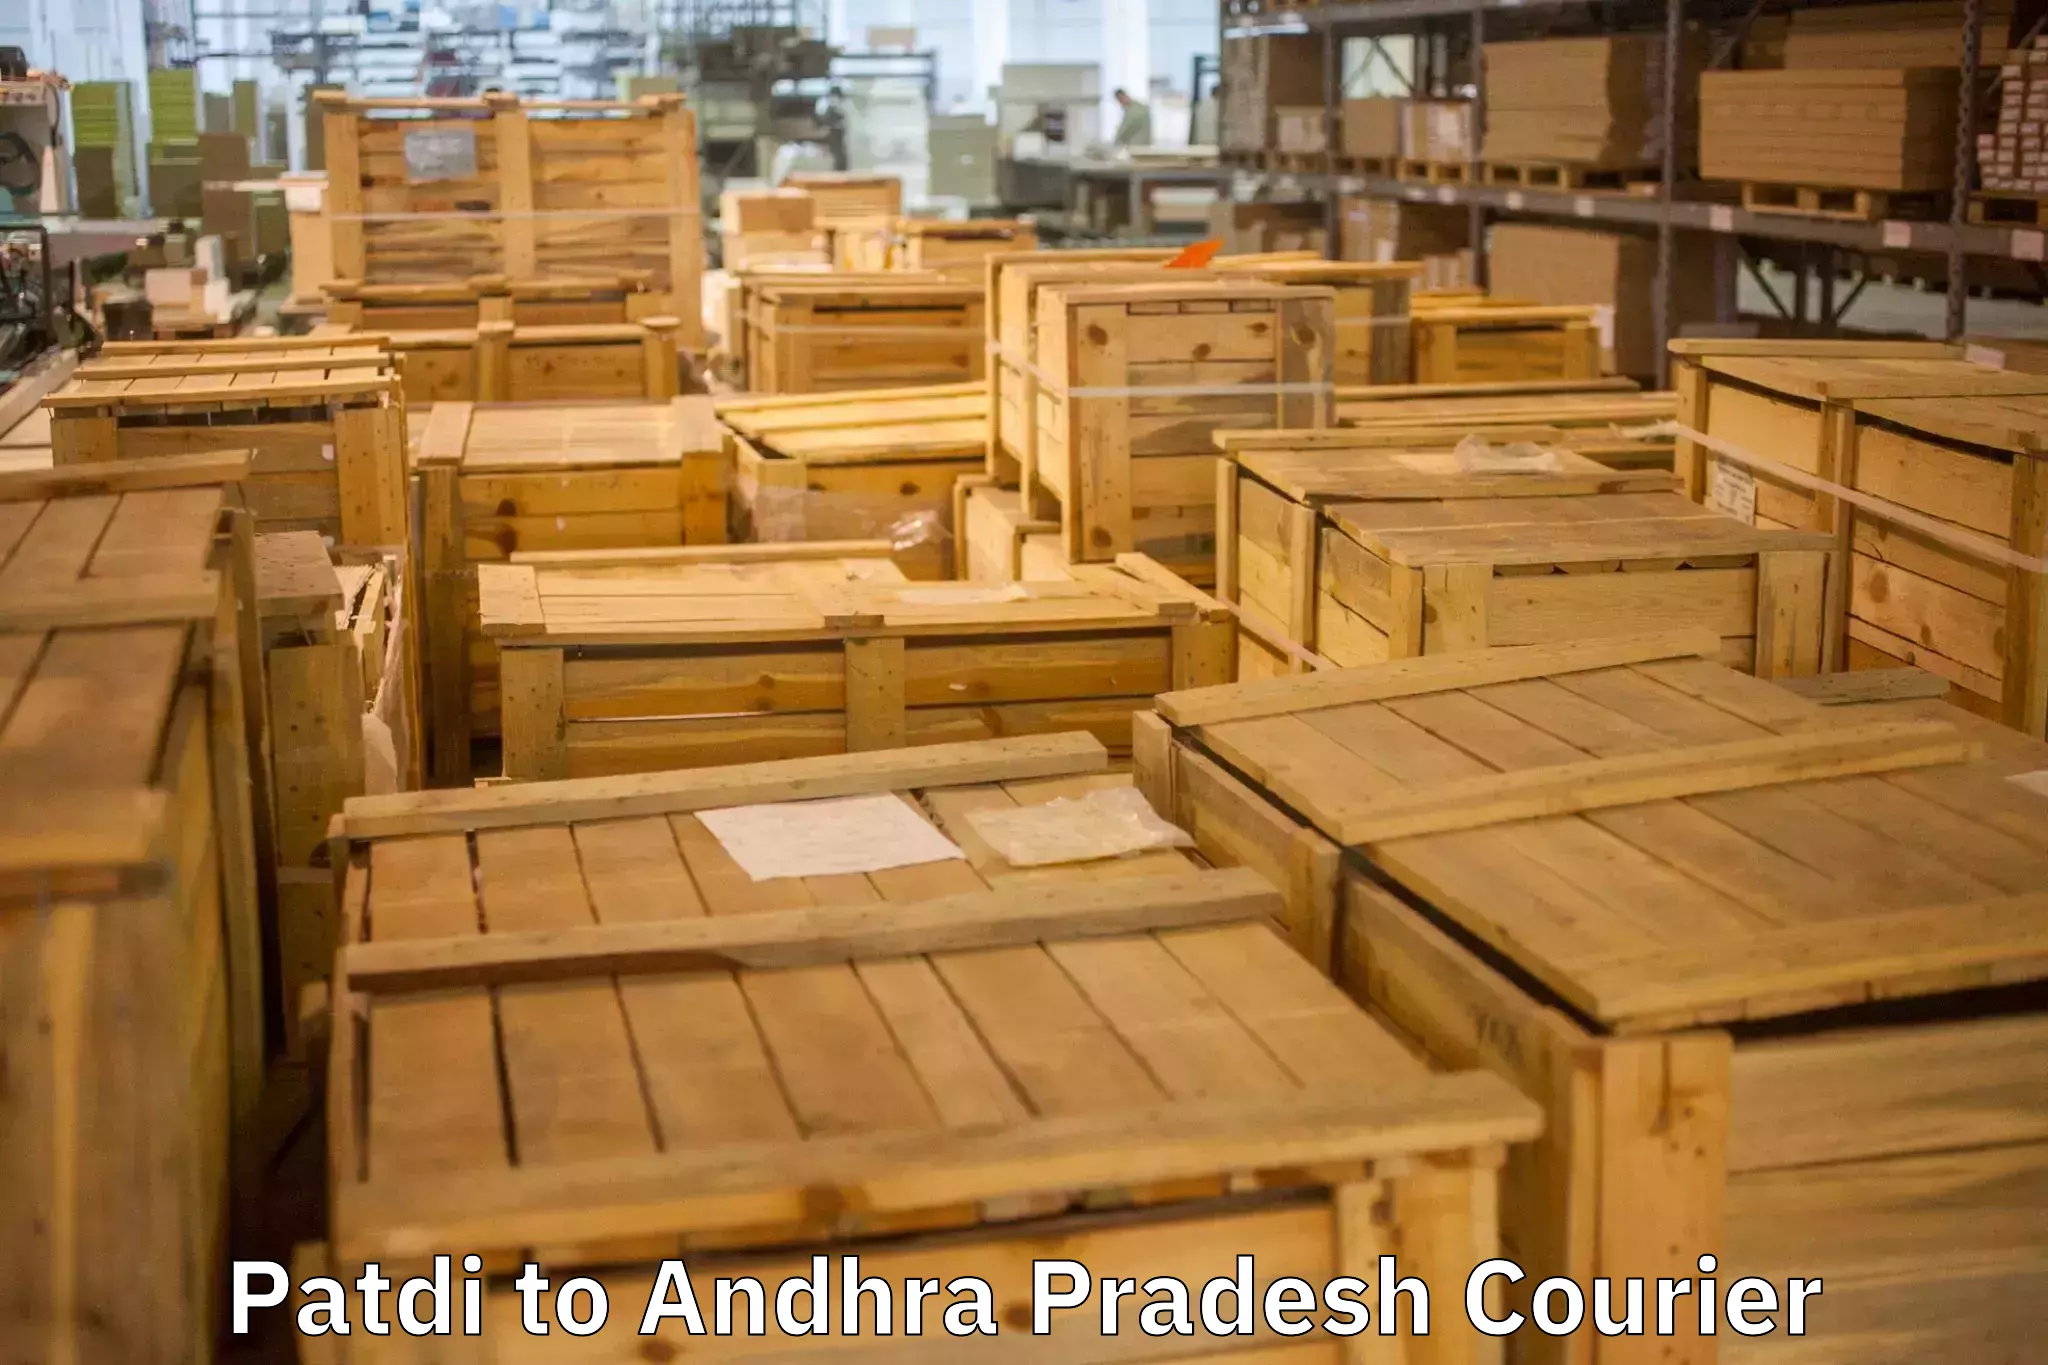 Specialized moving company Patdi to Kuppam